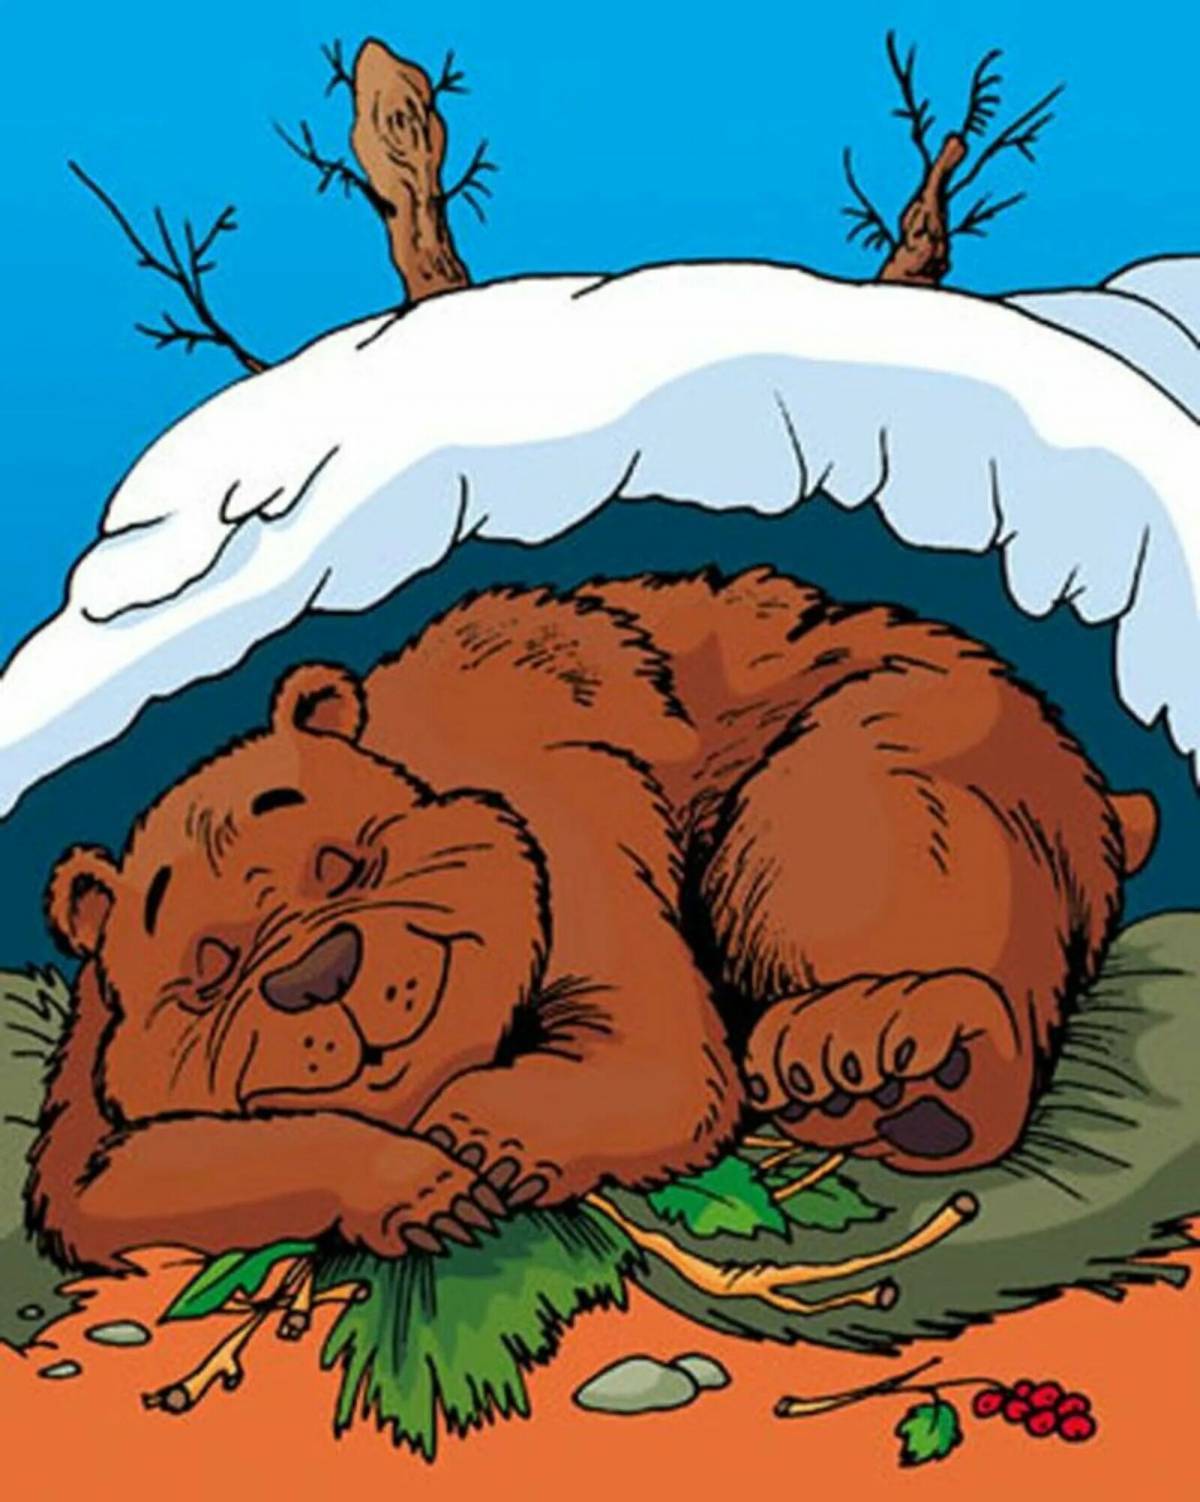 В берлоге дремлет. Медвежья Берлога. Бурый медведь зимой в берлоге. Медвежья Берлога Берлога медведя. Берлога медведя. Медведь в берлоге.